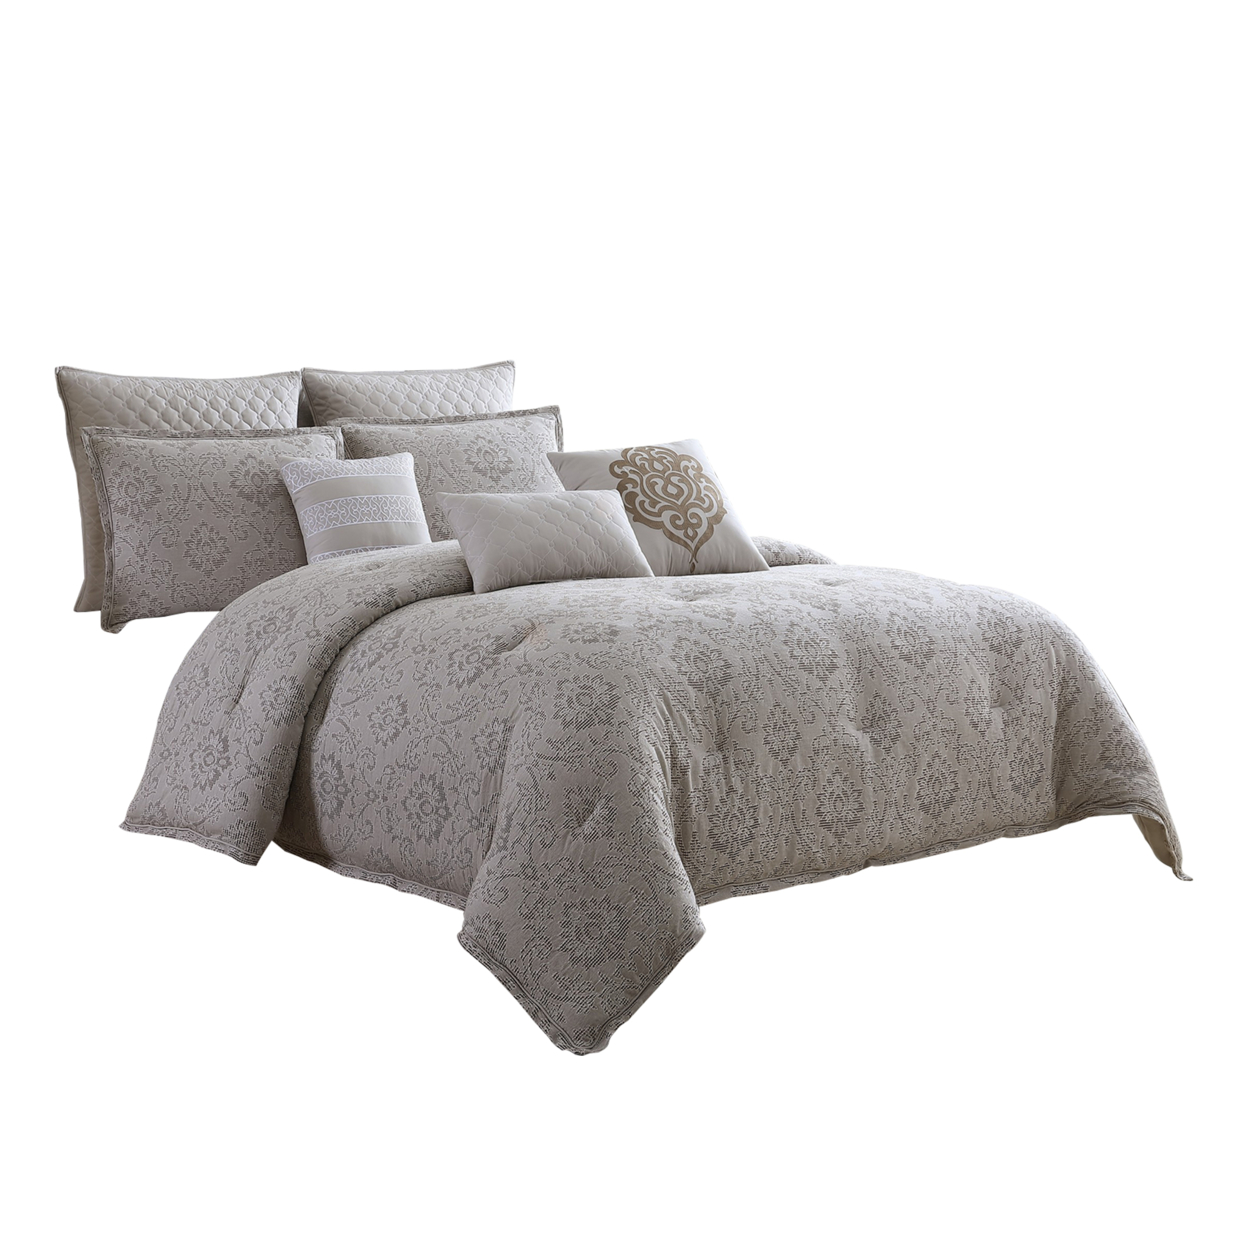 9 Piece Queen Cotton Comforter Set With Textured Floral Print, Gray- Saltoro Sherpi